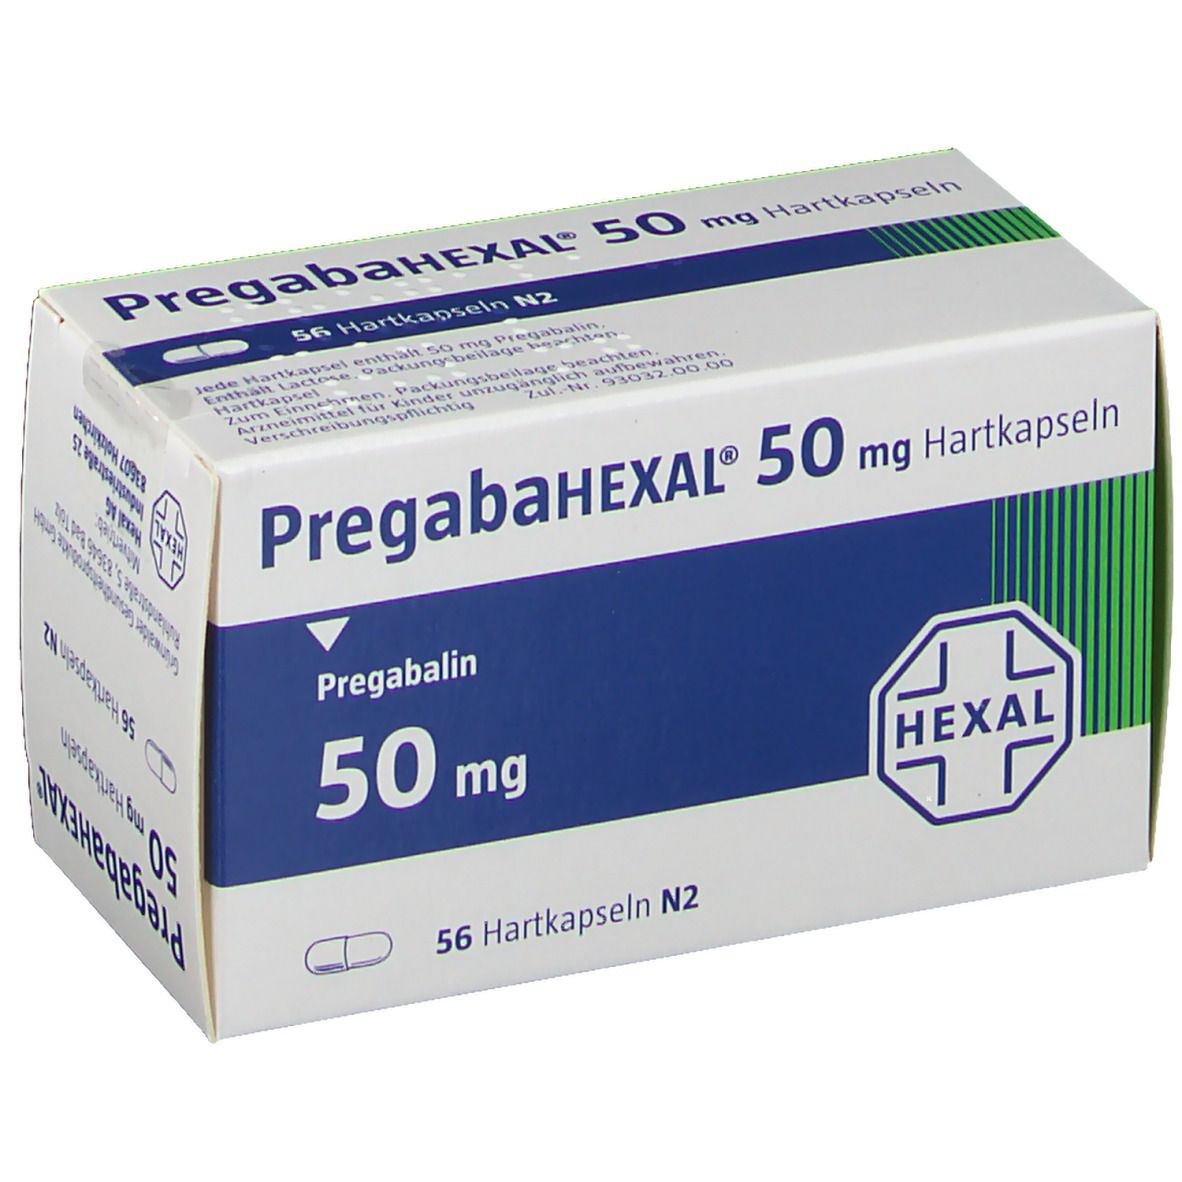 PregabaHEXAL® 50 mg